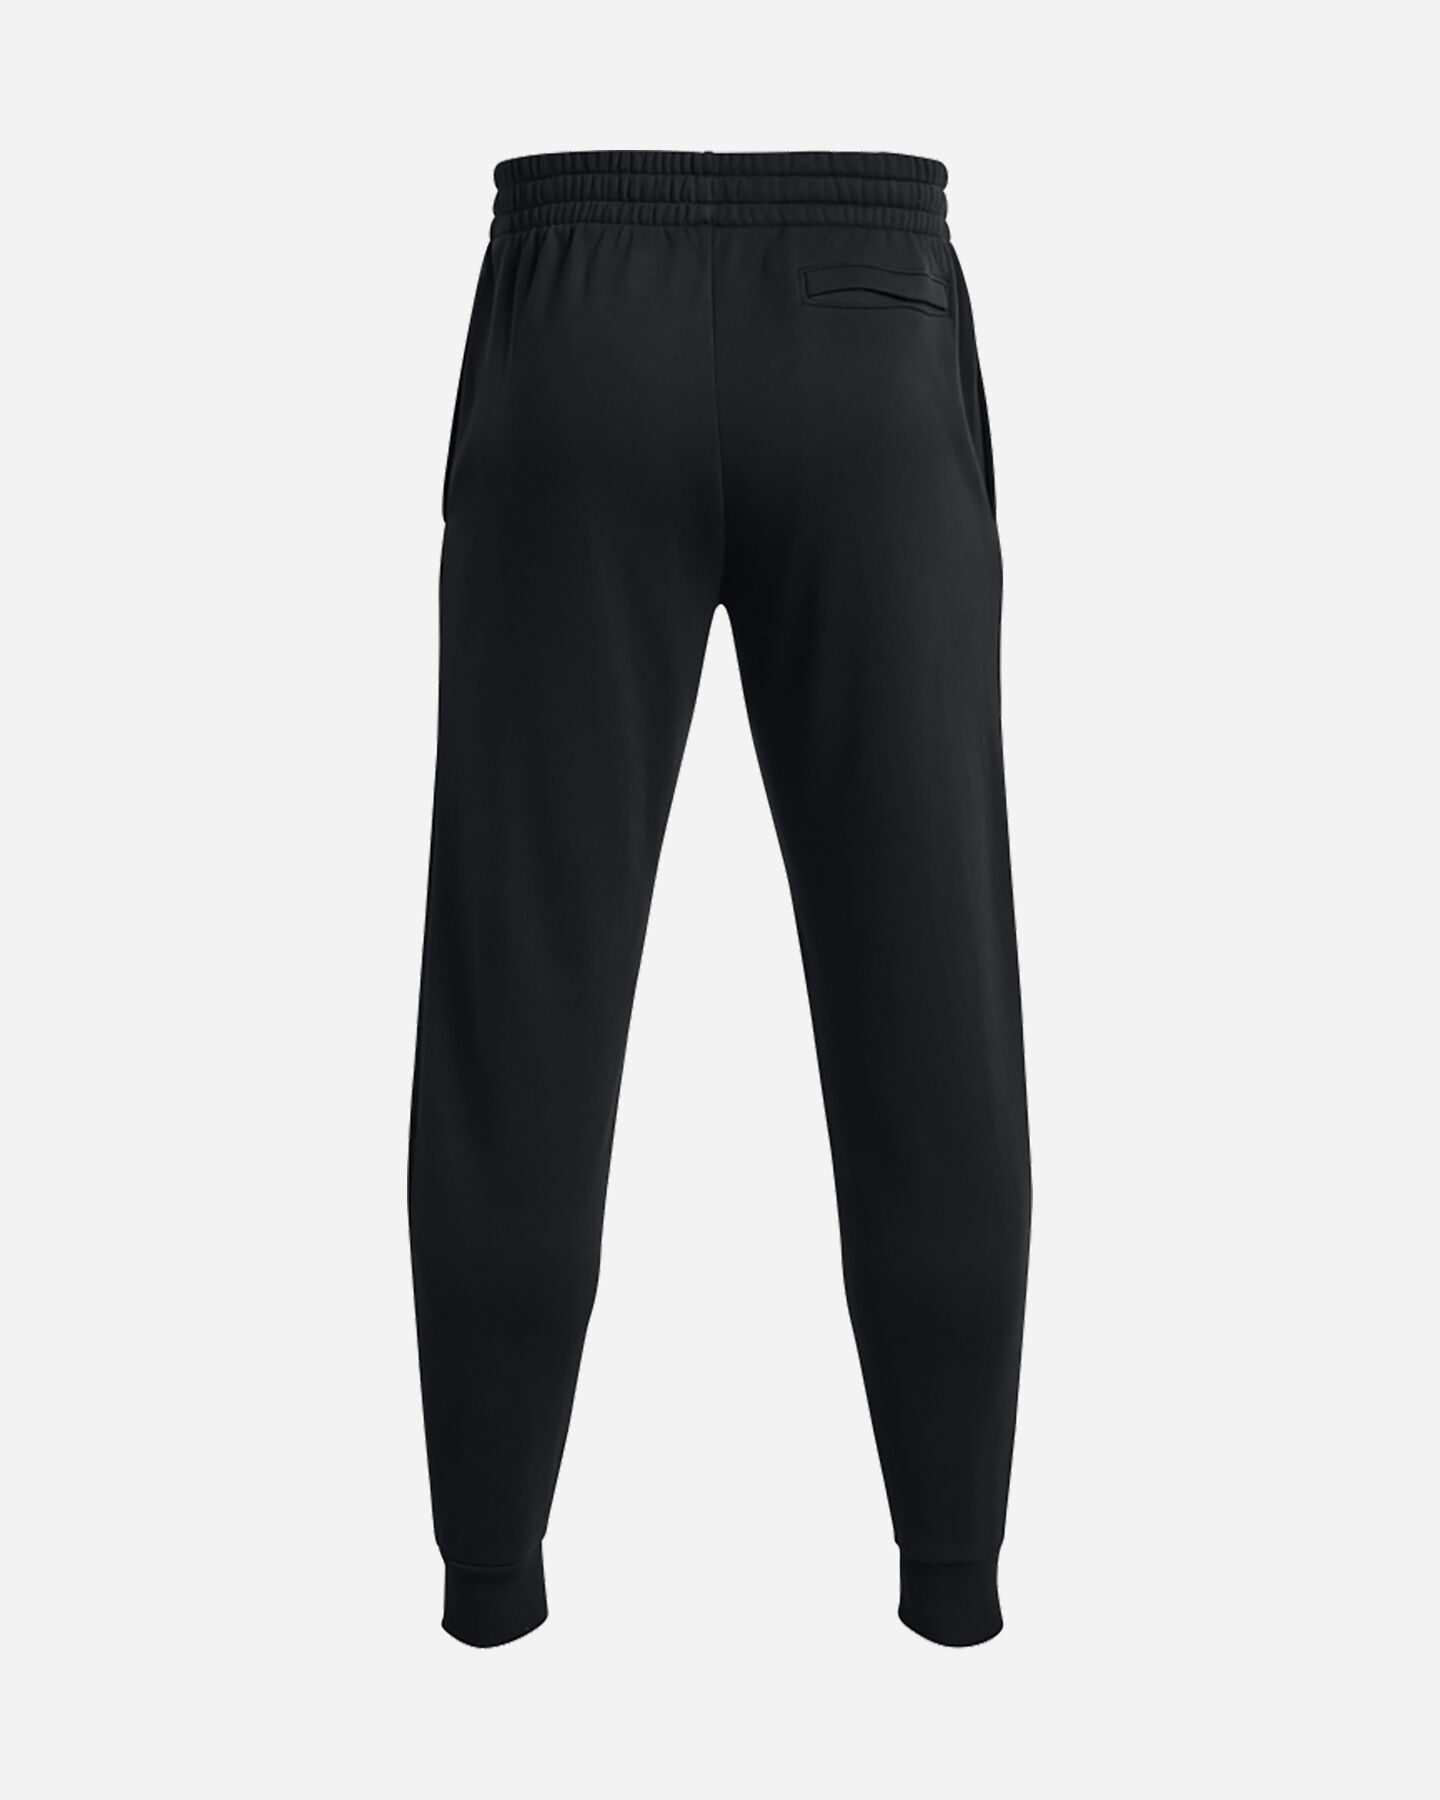  Pantalone UNDER ARMOUR RIVAL GRAPHIC LOGO M S5579613|0001|XS scatto 1